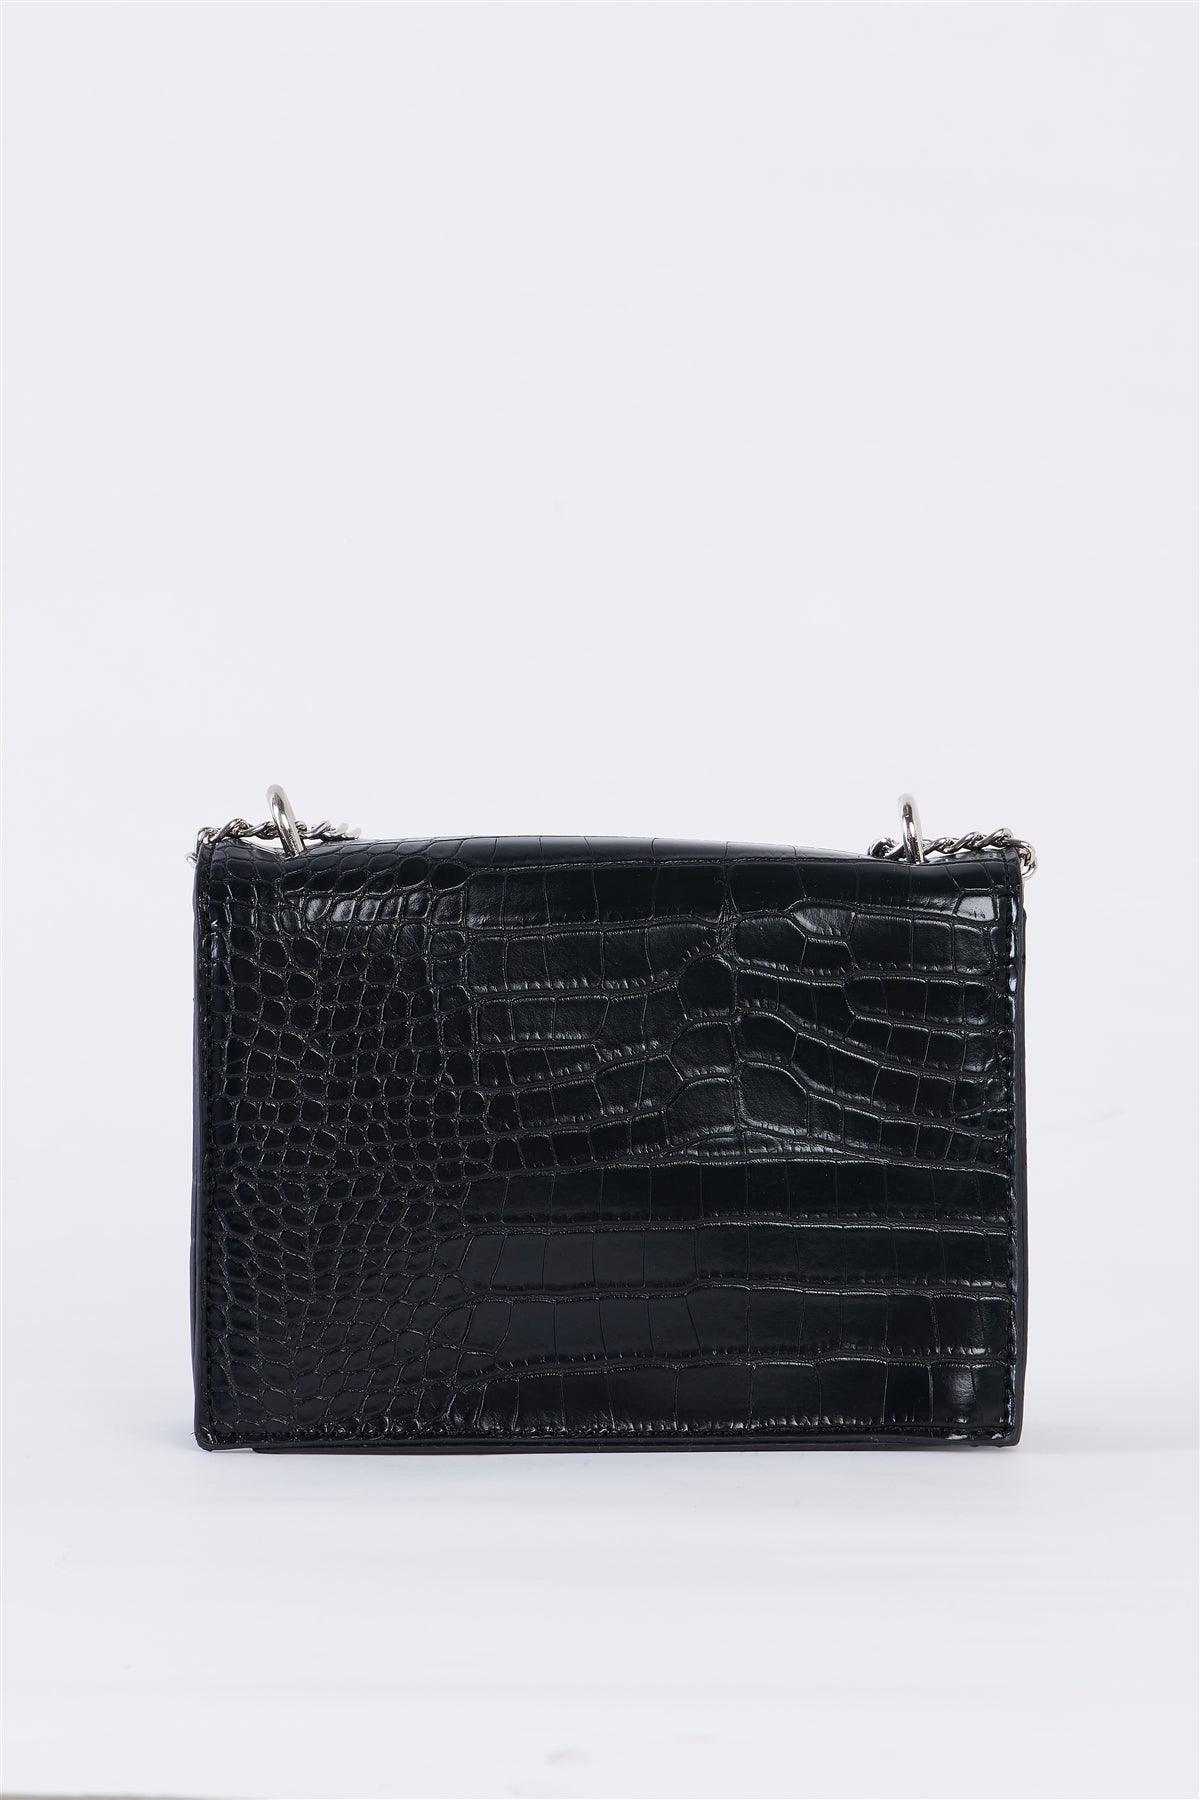 mmaa211bk black 3 black croc vegan leather glamorous crossbody chain bag 3 bags tasha apparel wholesale 3